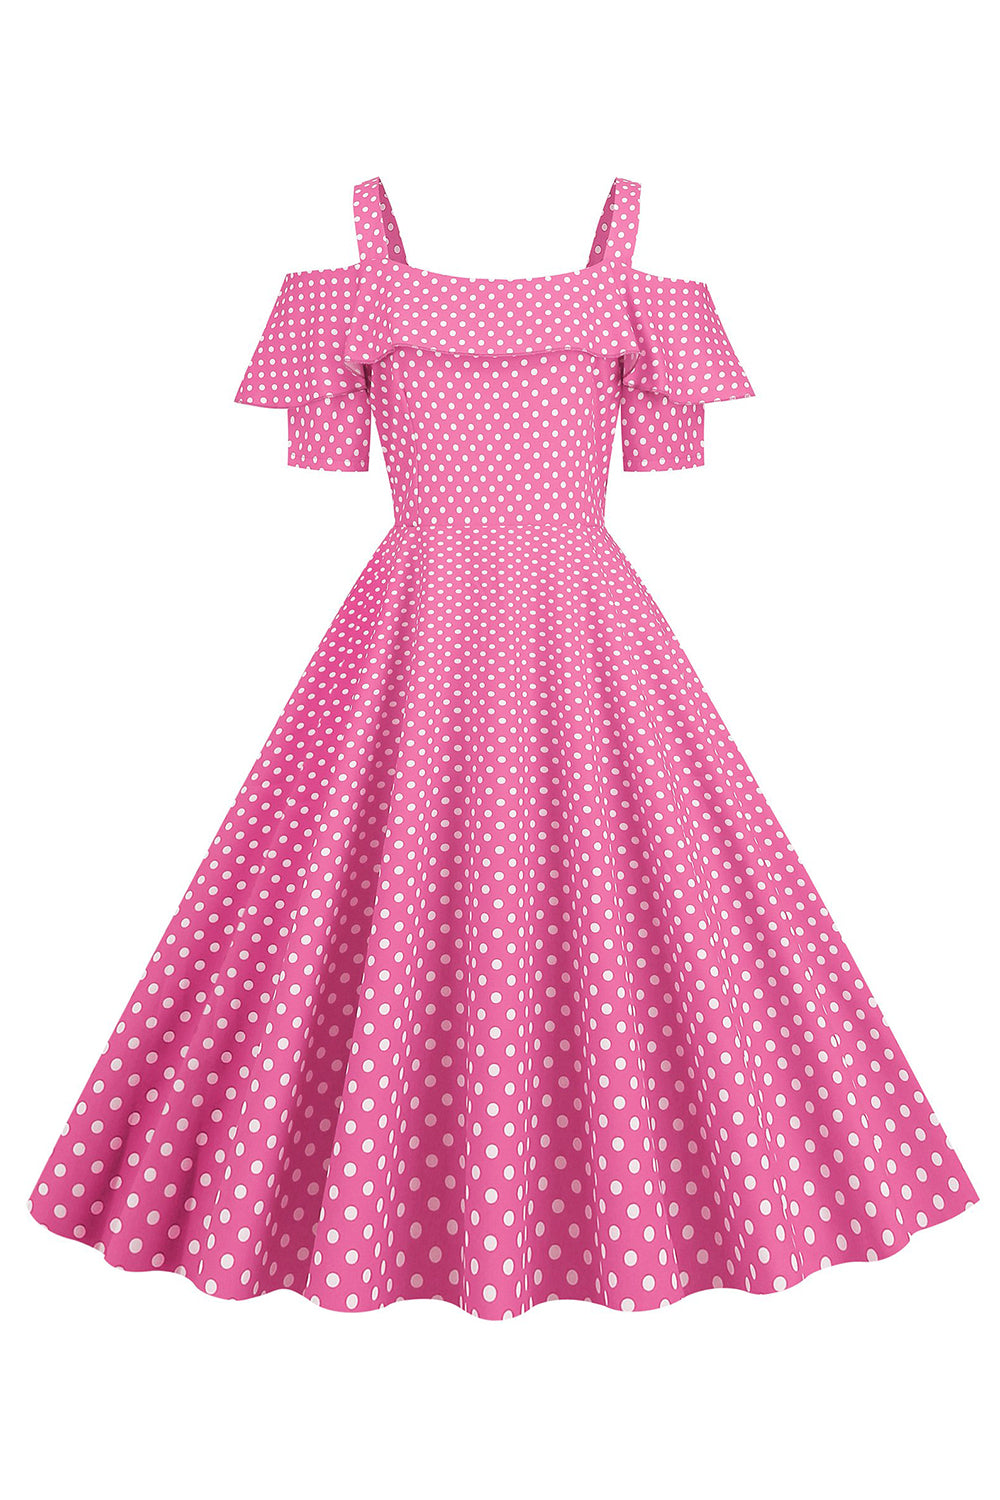 Kalte Schulter Polka Dots Rosa 1950er Jahre Kleid